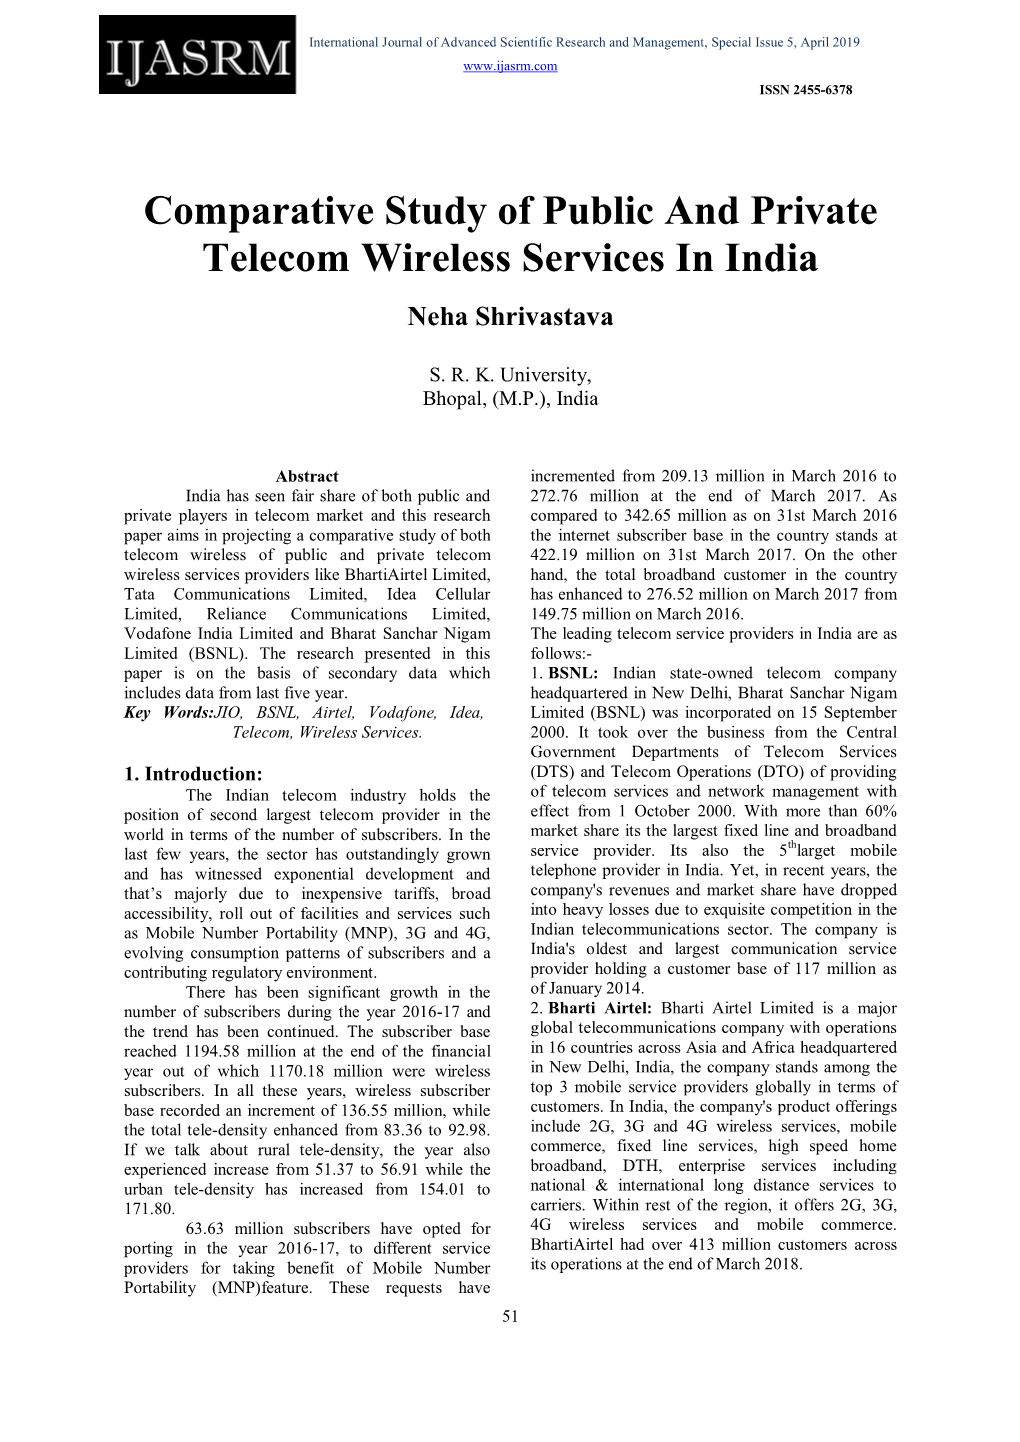 Comparative Study of Public and Private Telecom Wireless Services in India